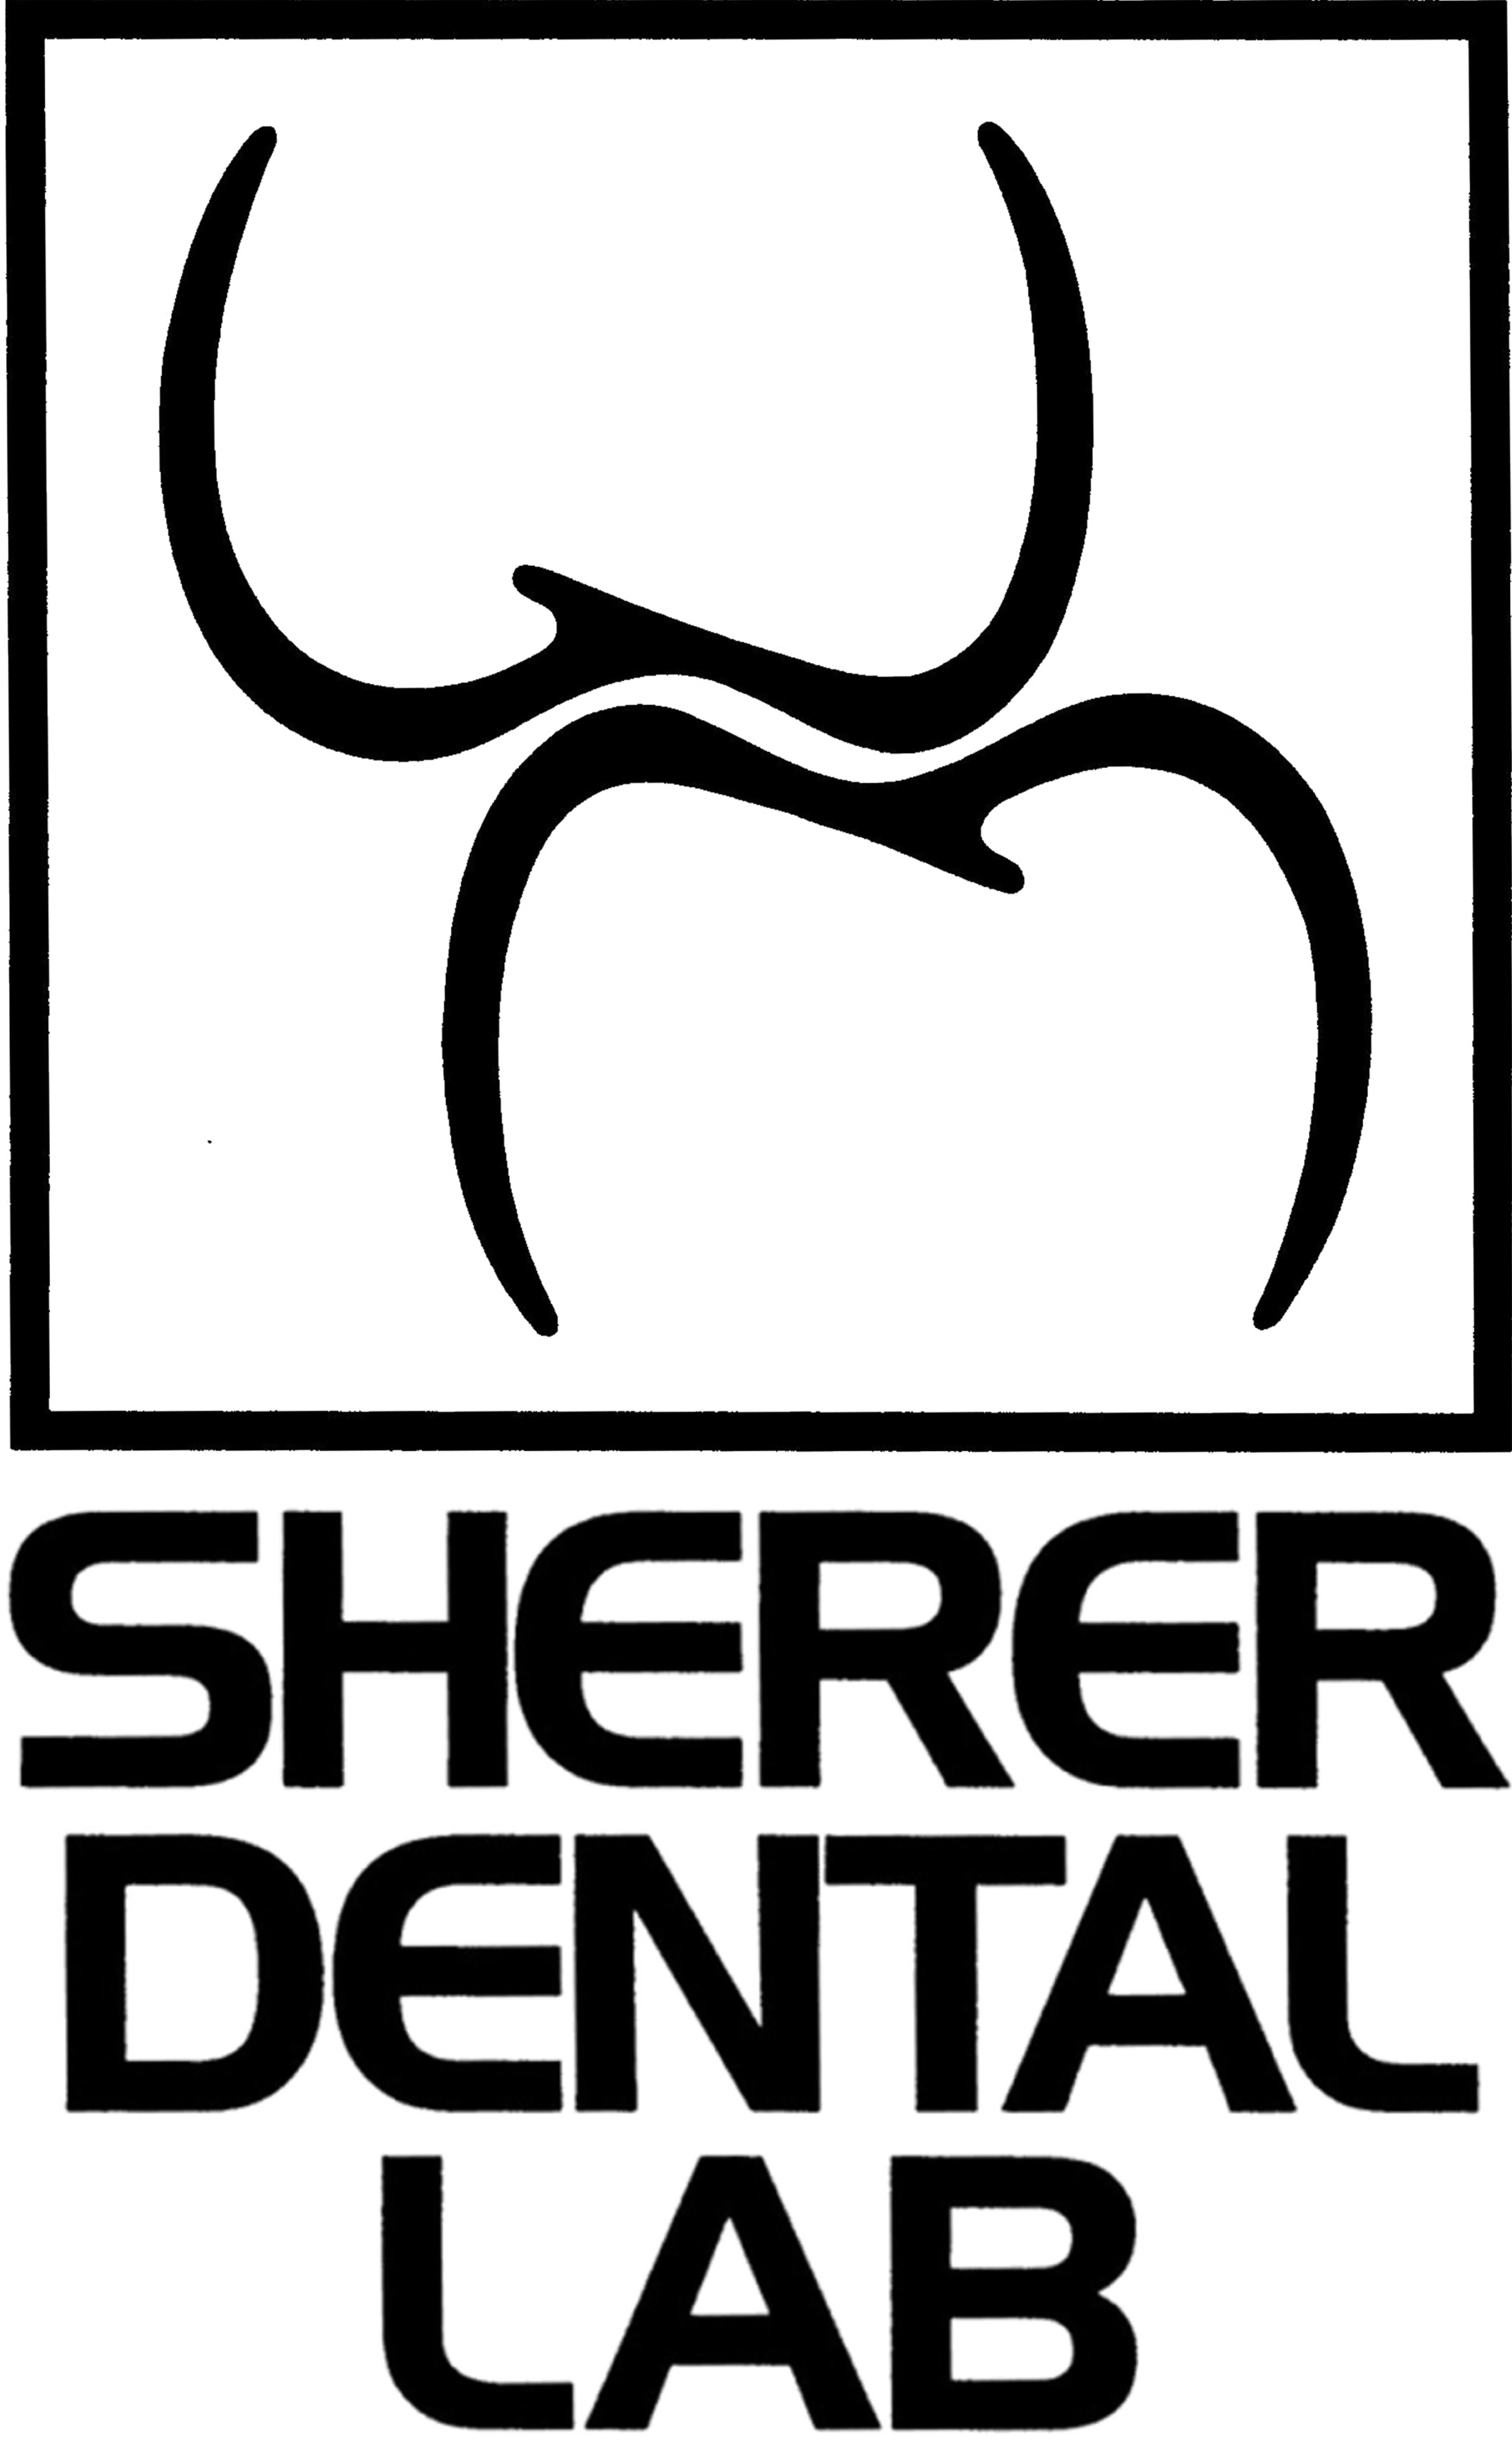 Sherer Dental Laboratory Inc